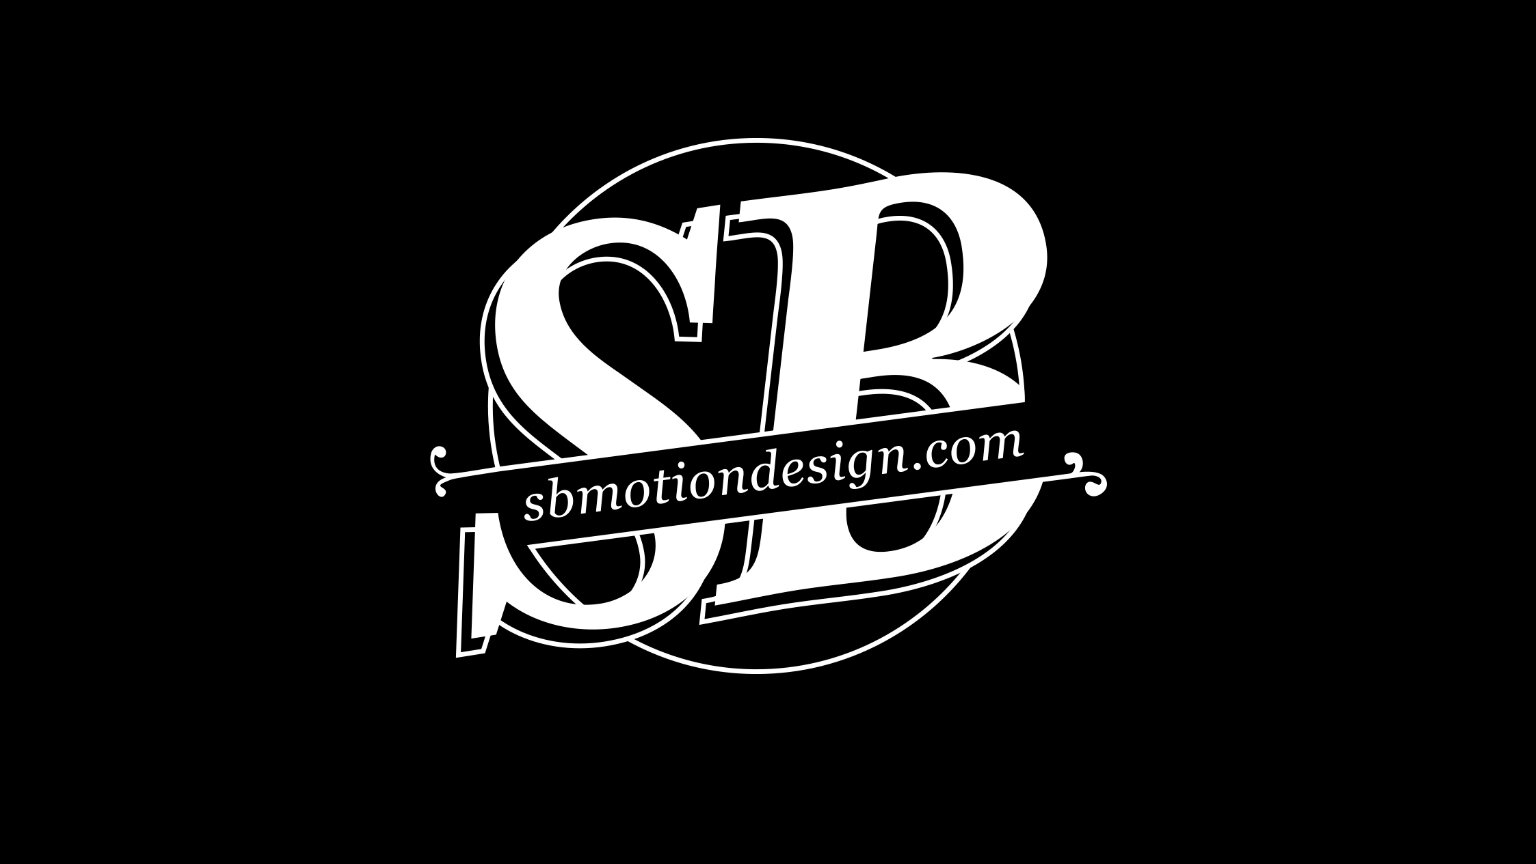 sbmotiondesign.com